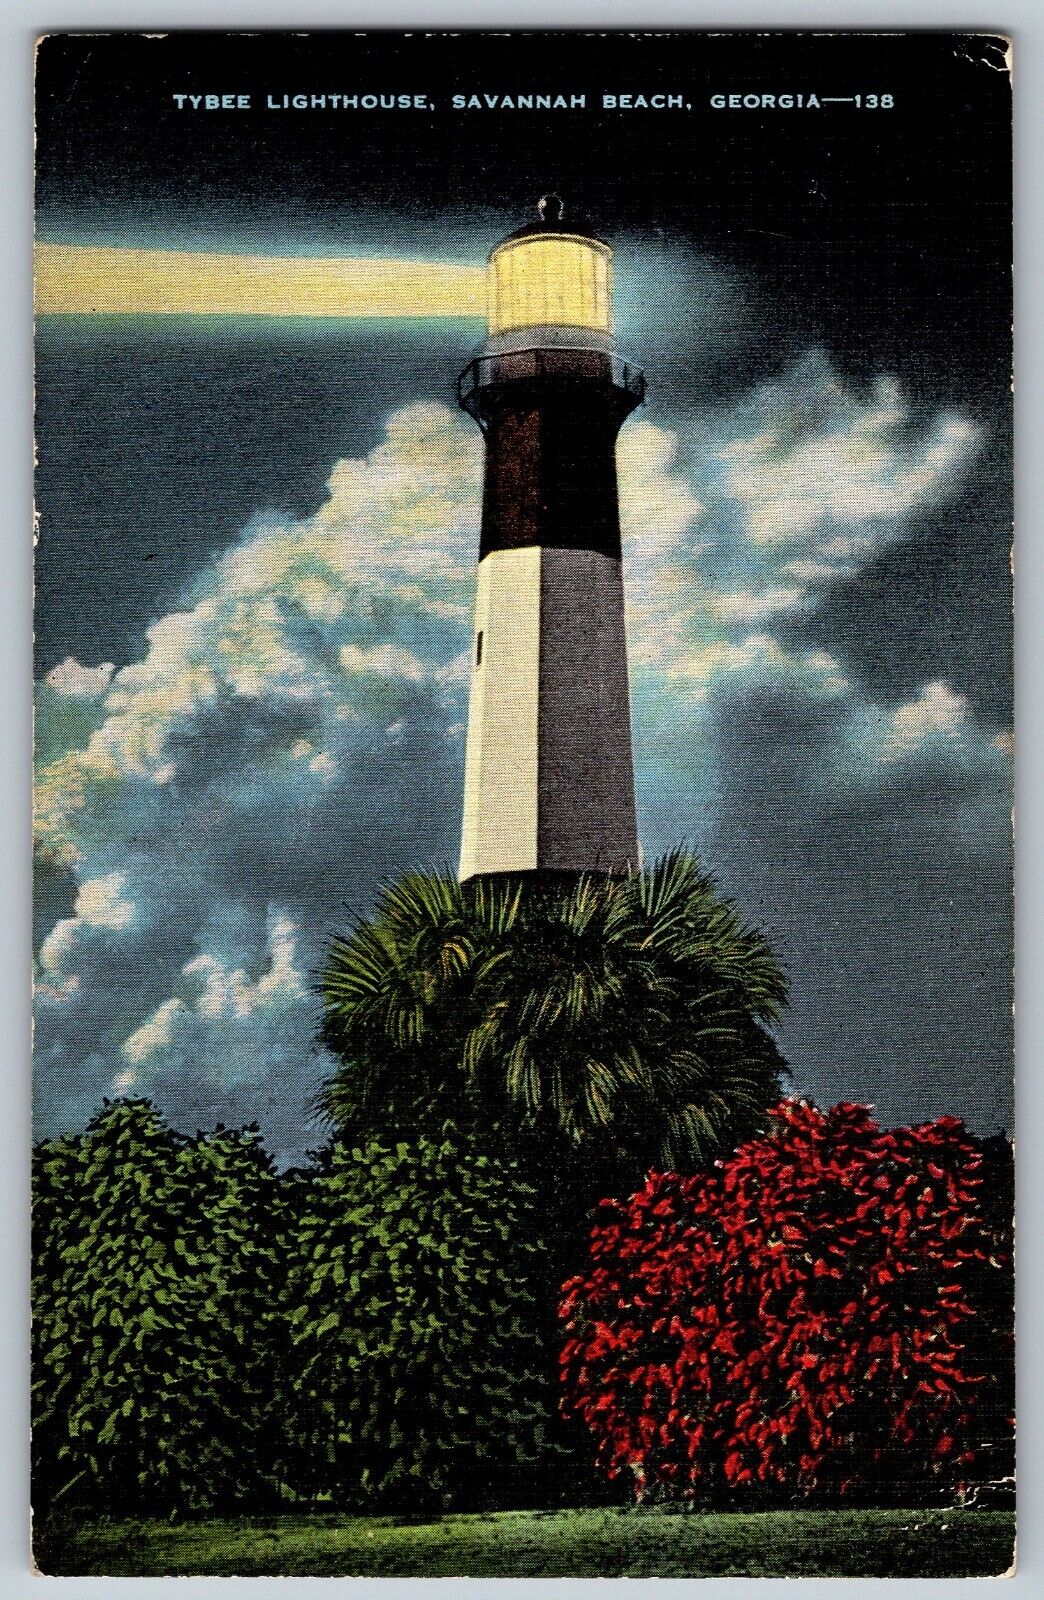 Savannah Beach, Georgia GA - Beauty Spot of Tybee Lighthouse - Vintage Postcard